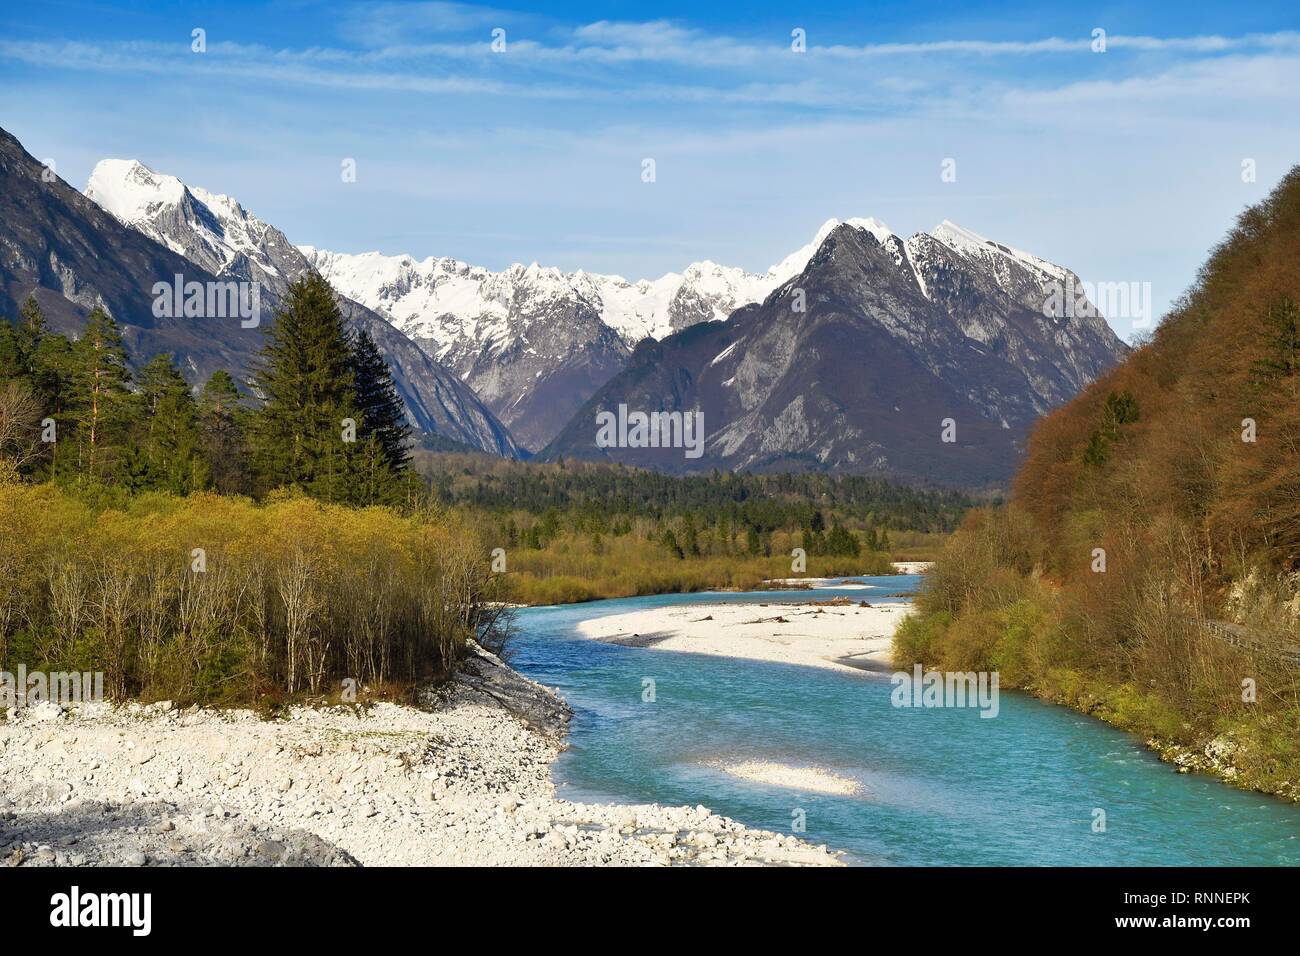 Río de montaña Soca, detrás de las montañas cubiertas de nieve, Bovec Kanin, Soca Valley, Alpes Julianos, Eslovenia Foto de stock